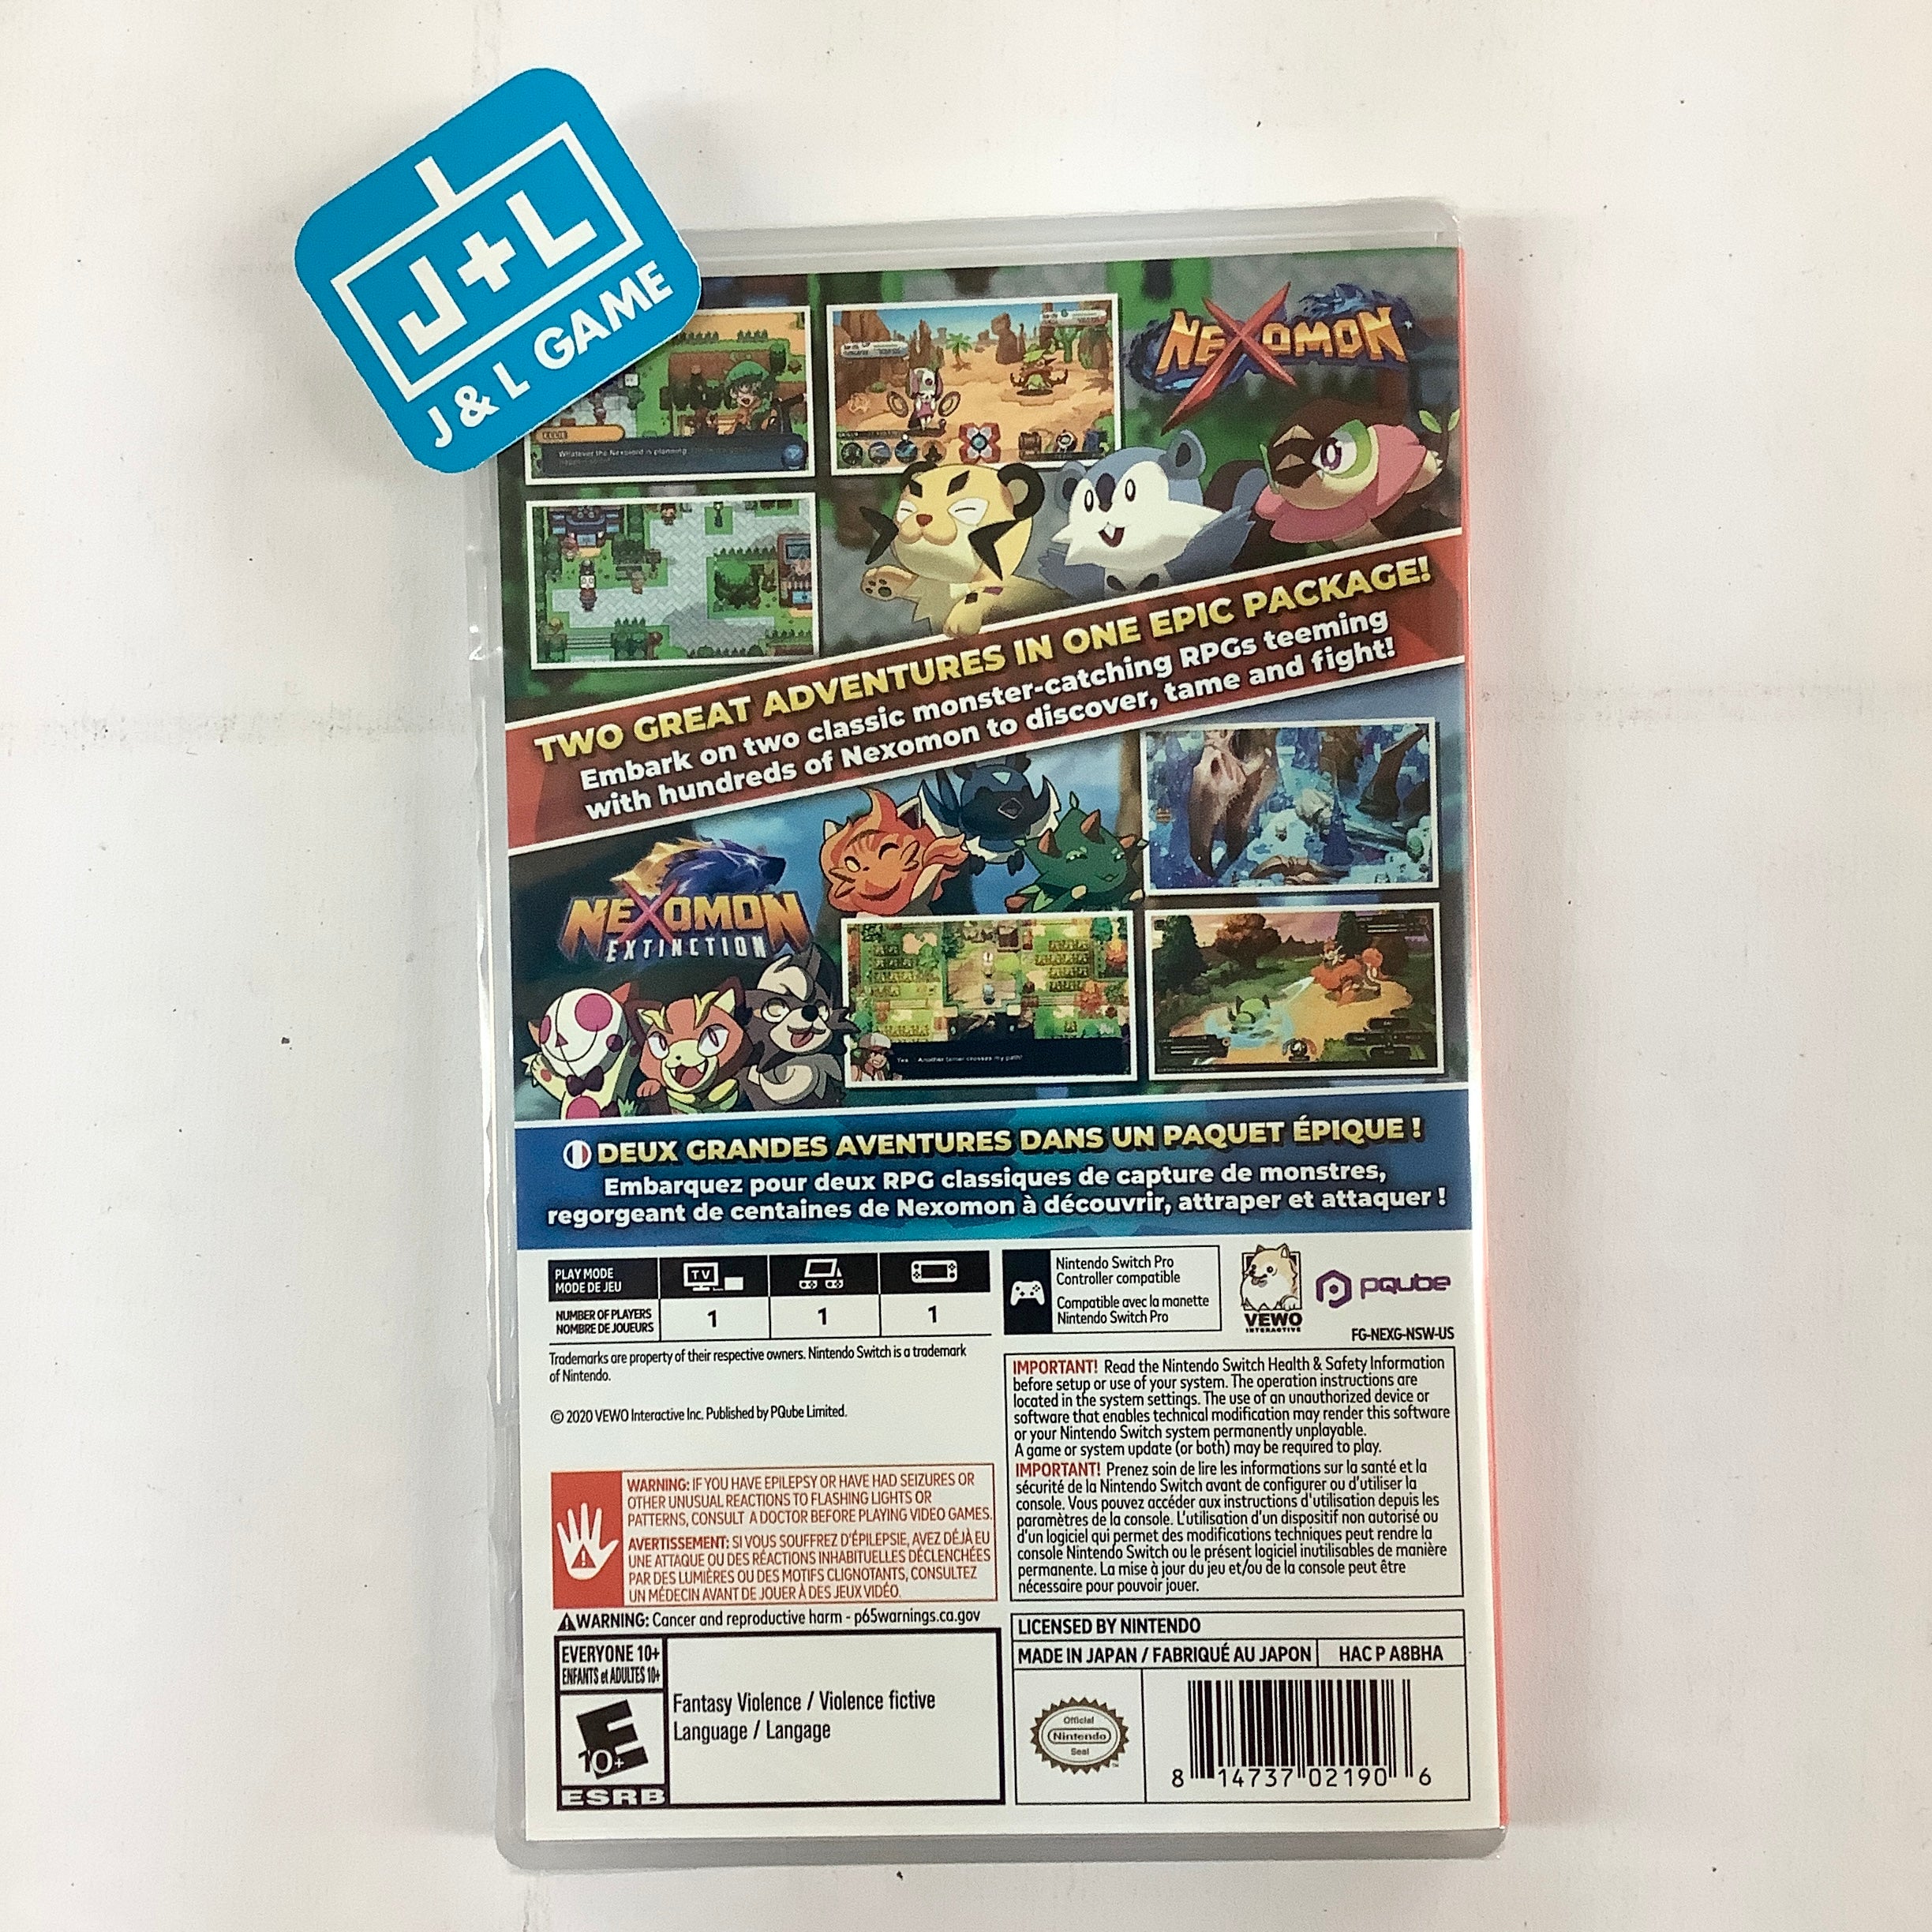 Nexomon + Nexomon Extinction - Complete Collection - (NSW) Nintendo Switch Video Games PQube   